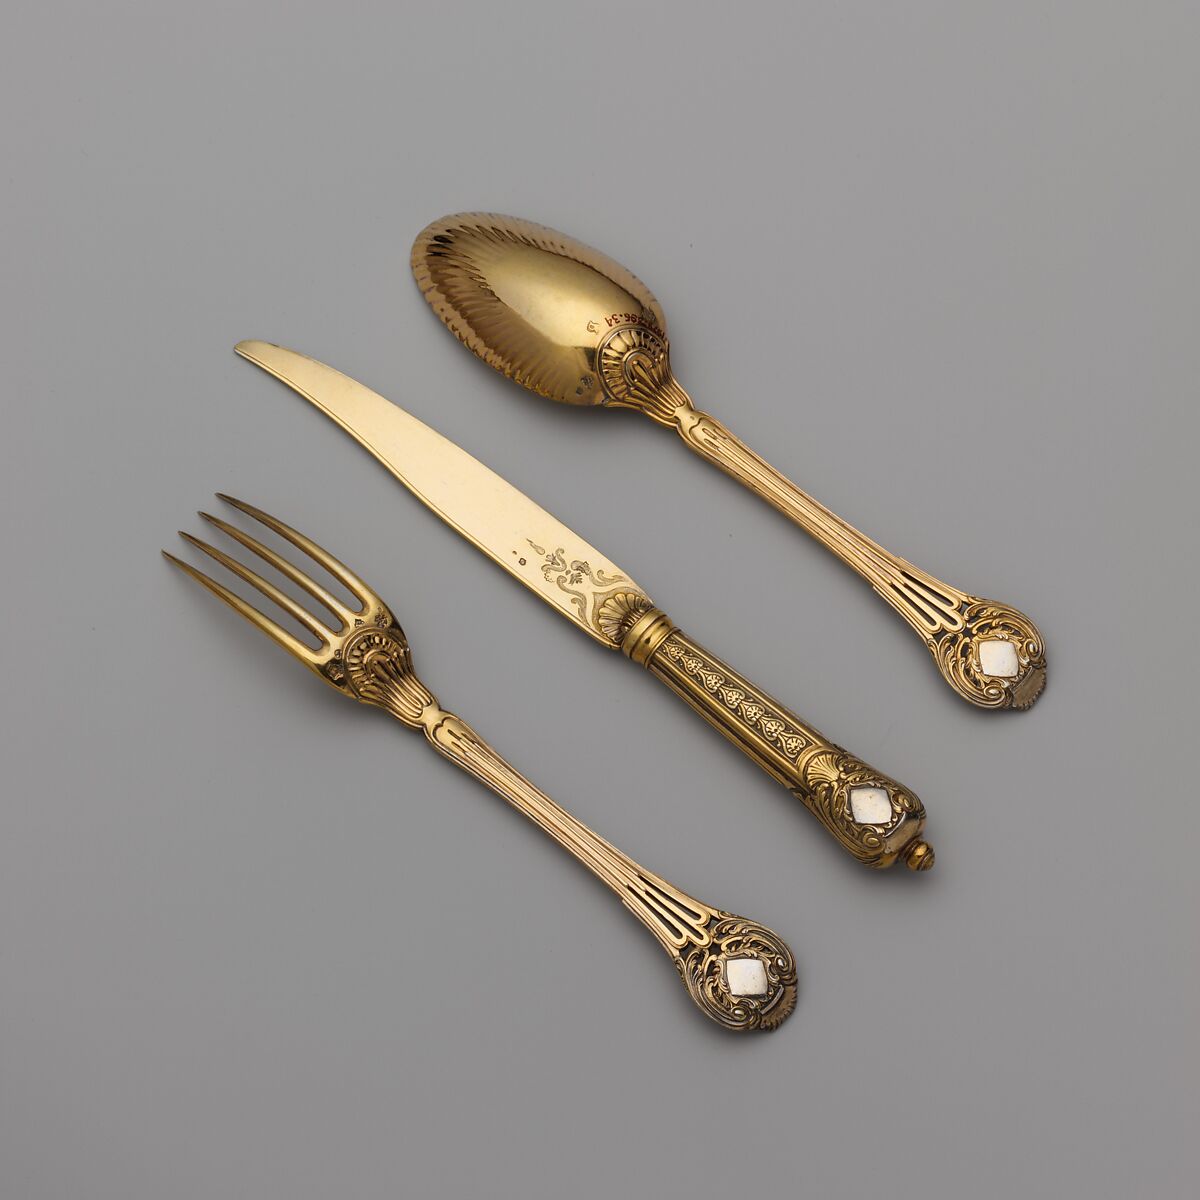 Set of six knives, Louis-Joseph Lenhendrick (master 1747, died 1783), Gilt silver, silver, French, Paris 